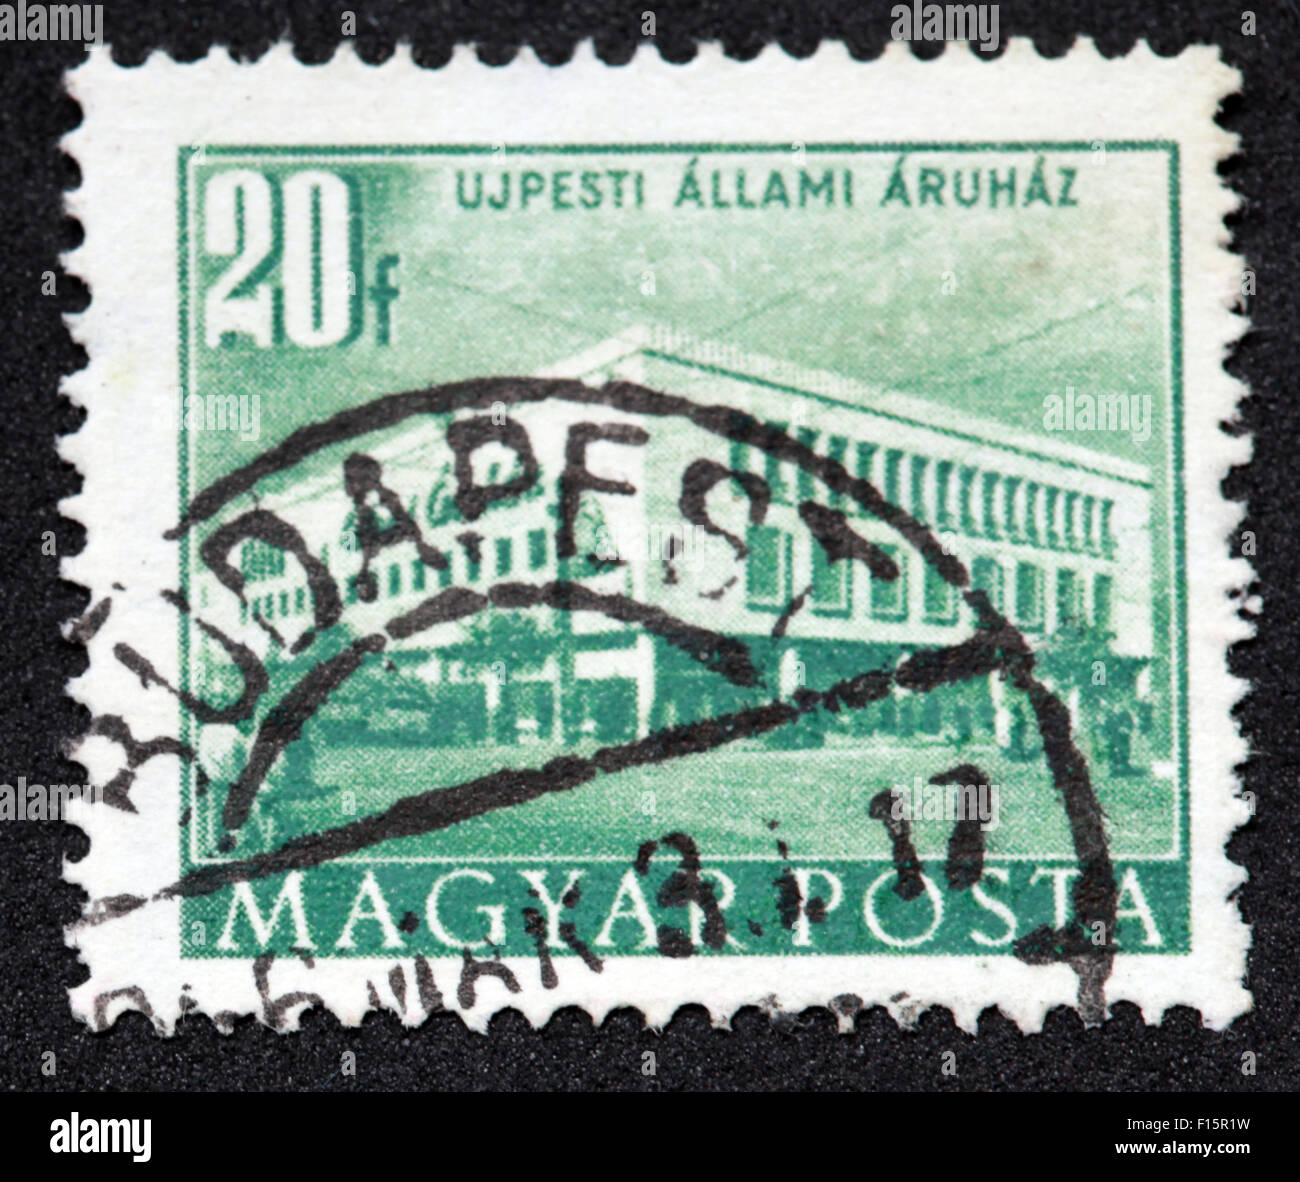 Magyar UjPesti Allami 20f Budapest postmark Stamp, Hungary Stock Photo